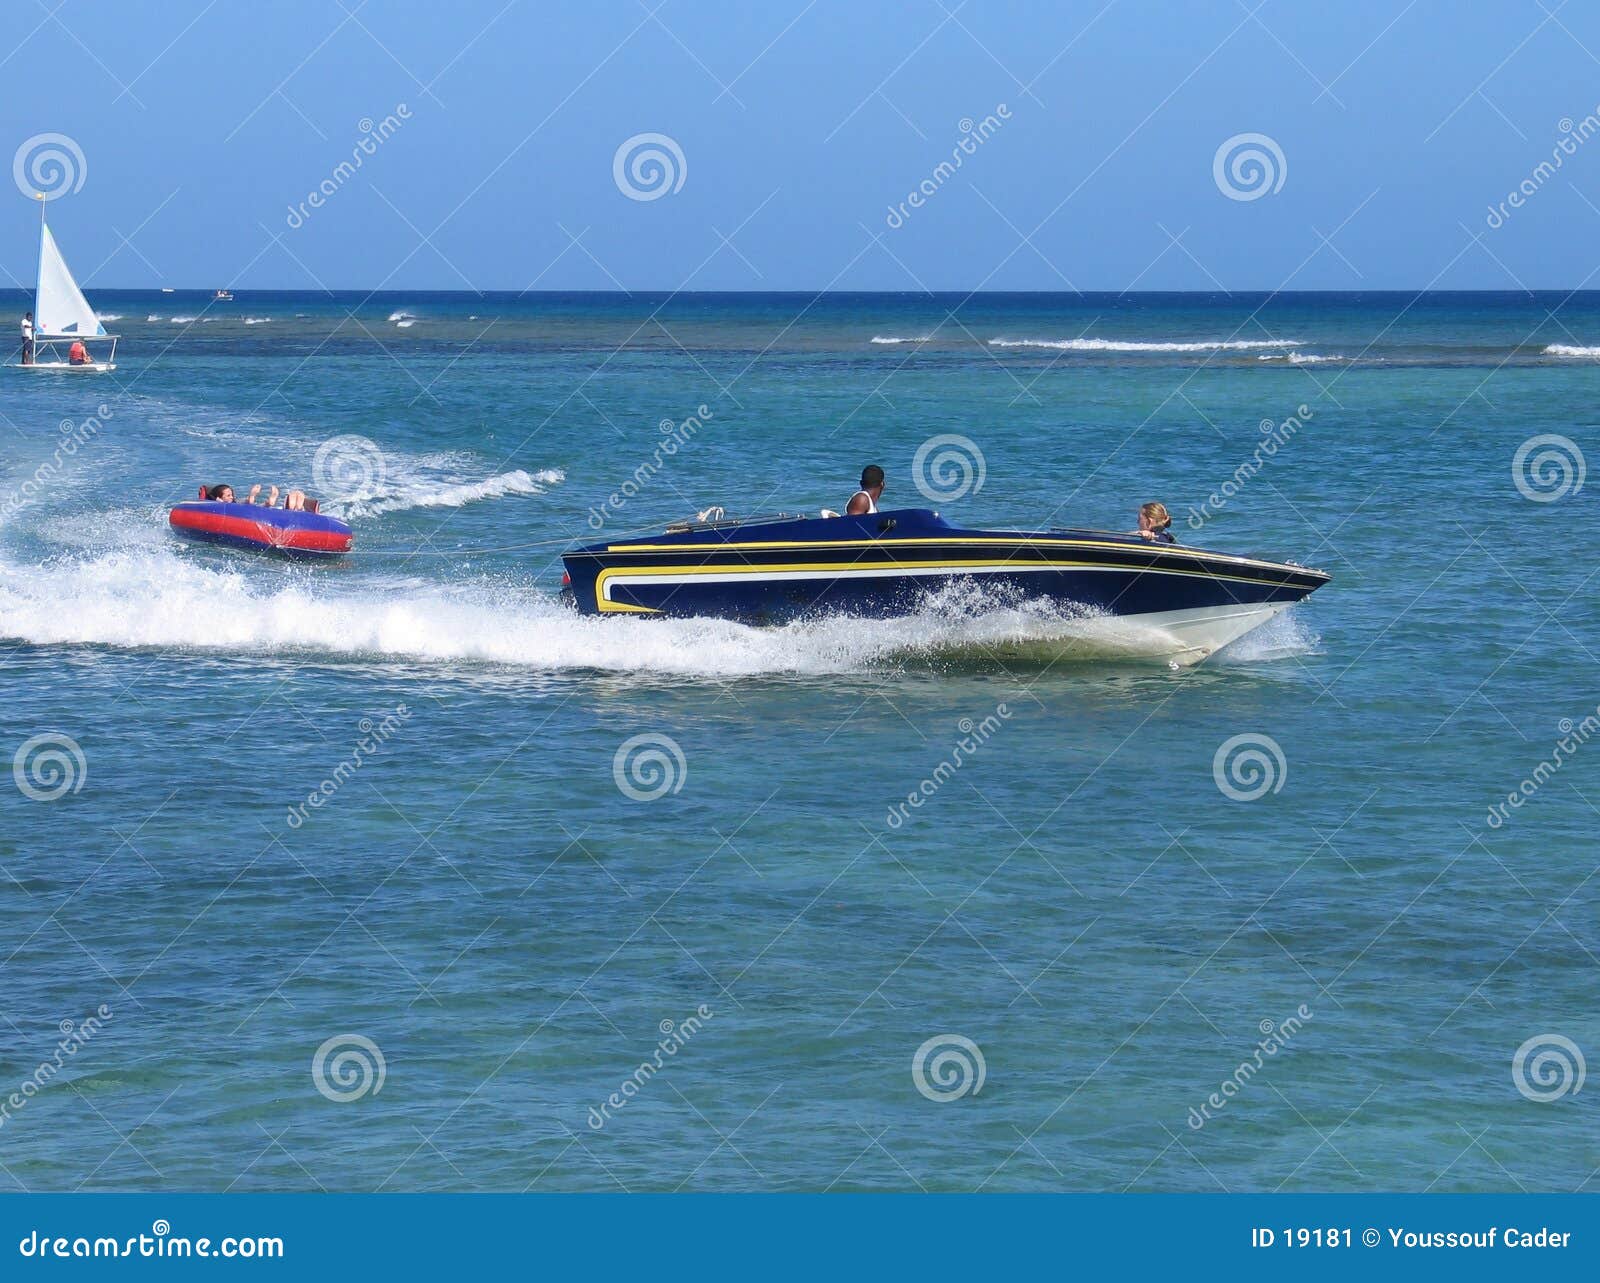 speedy boat